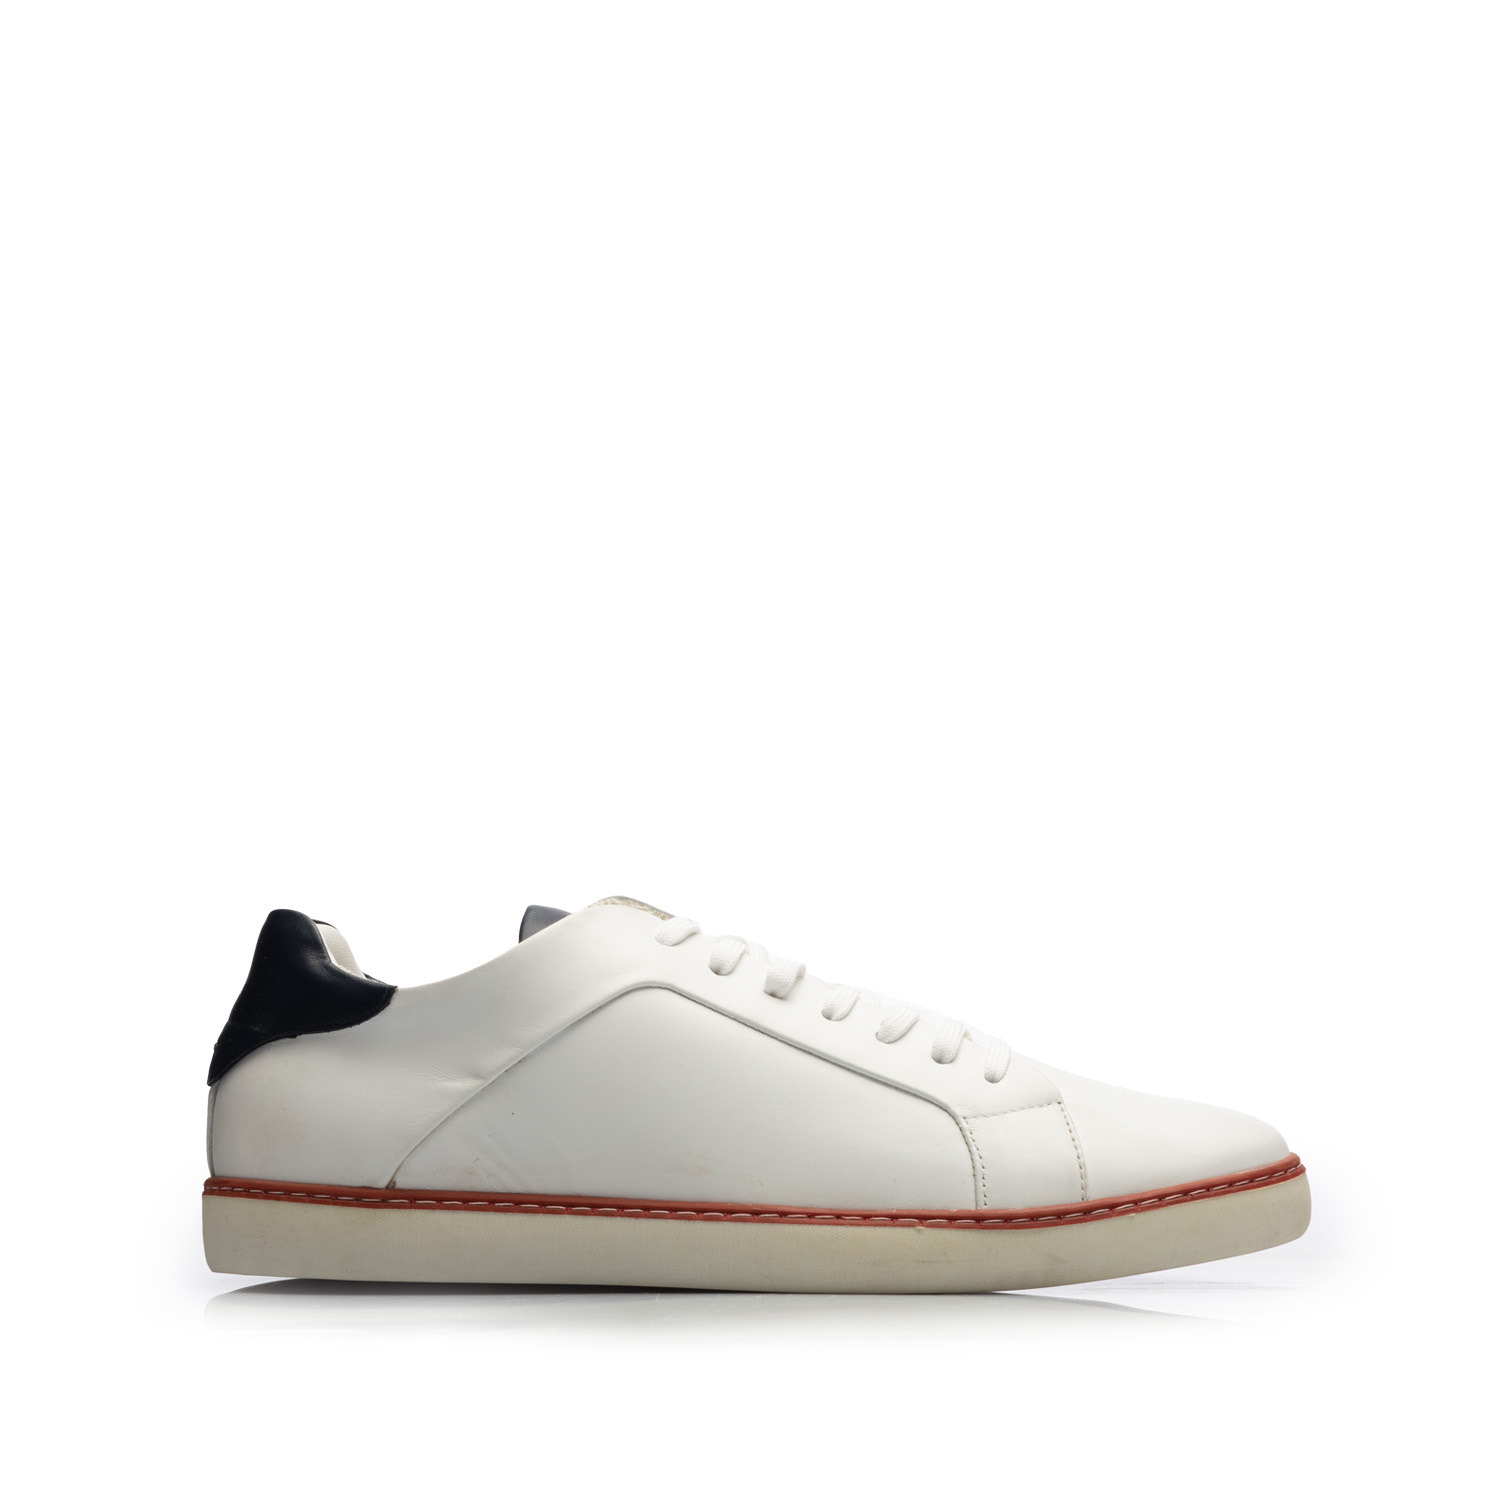 Pantofi sport barbati din piele naturala, Leofex - Mostra 881-1 Alb Box